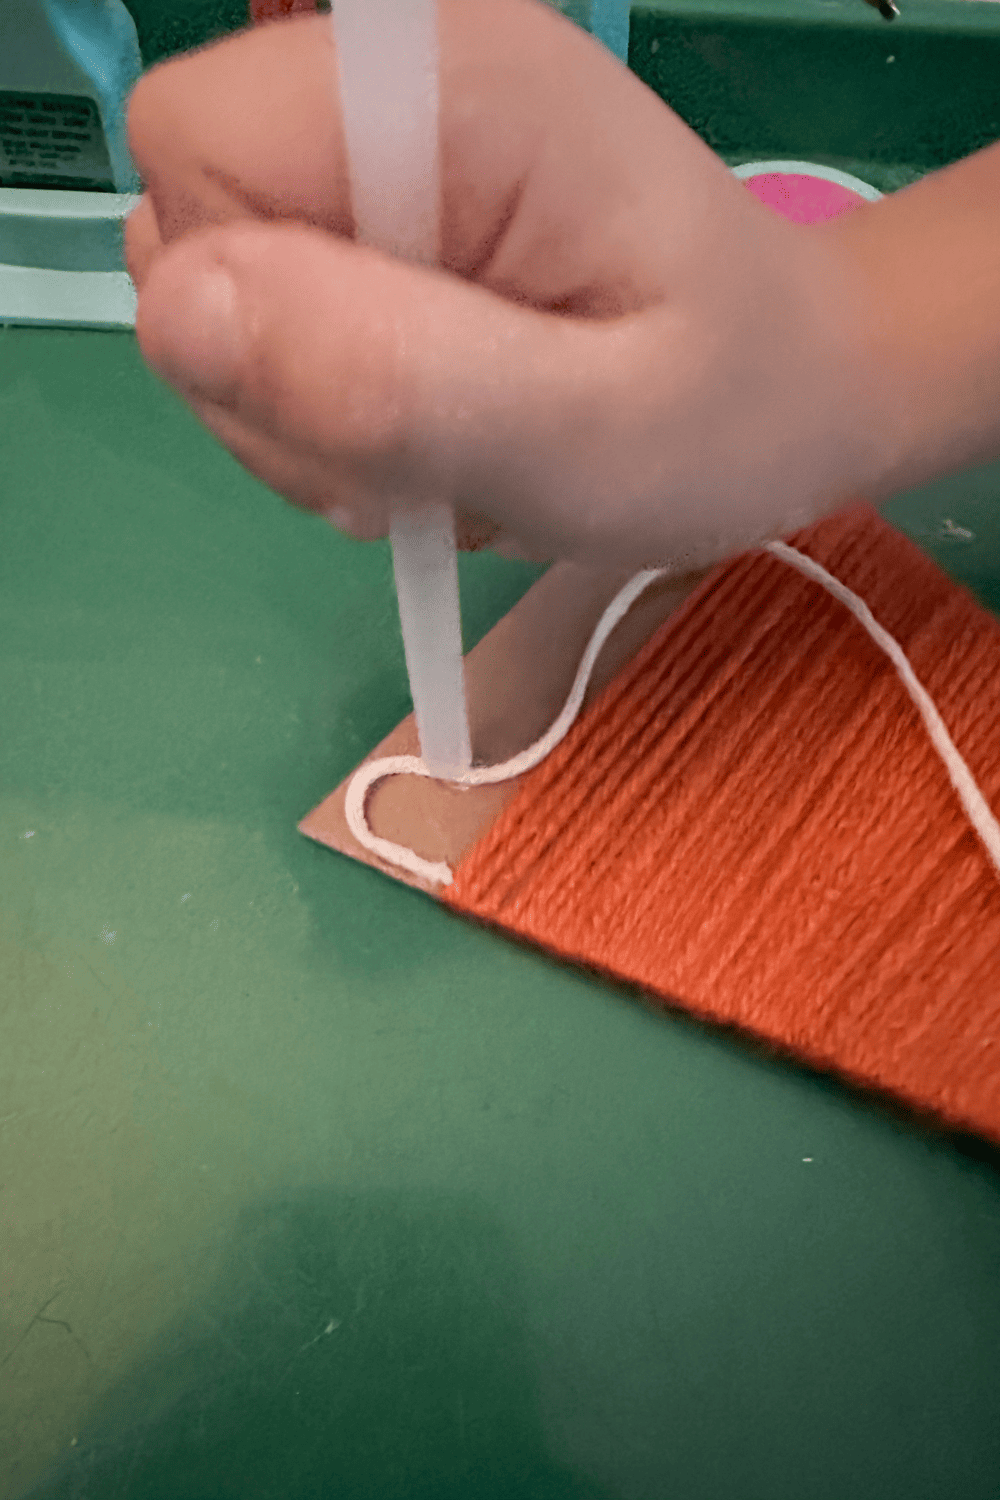 child using hot glue stick to help attach yarn to cardboard